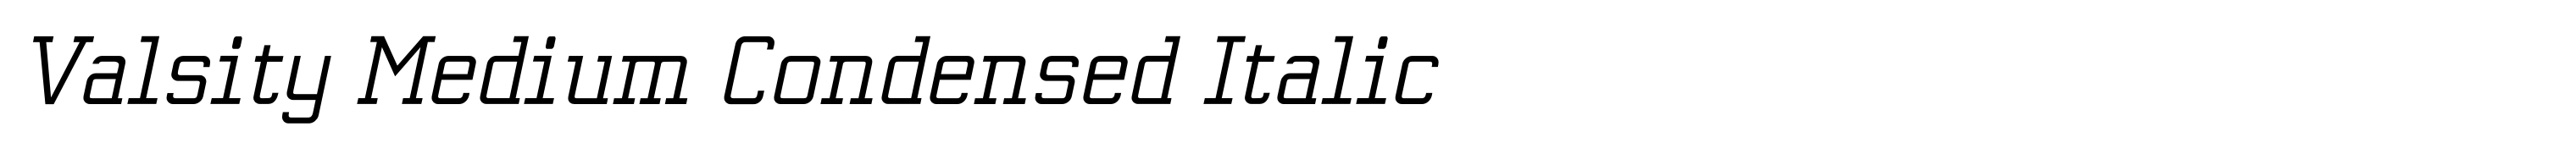 Valsity Medium Condensed Italic